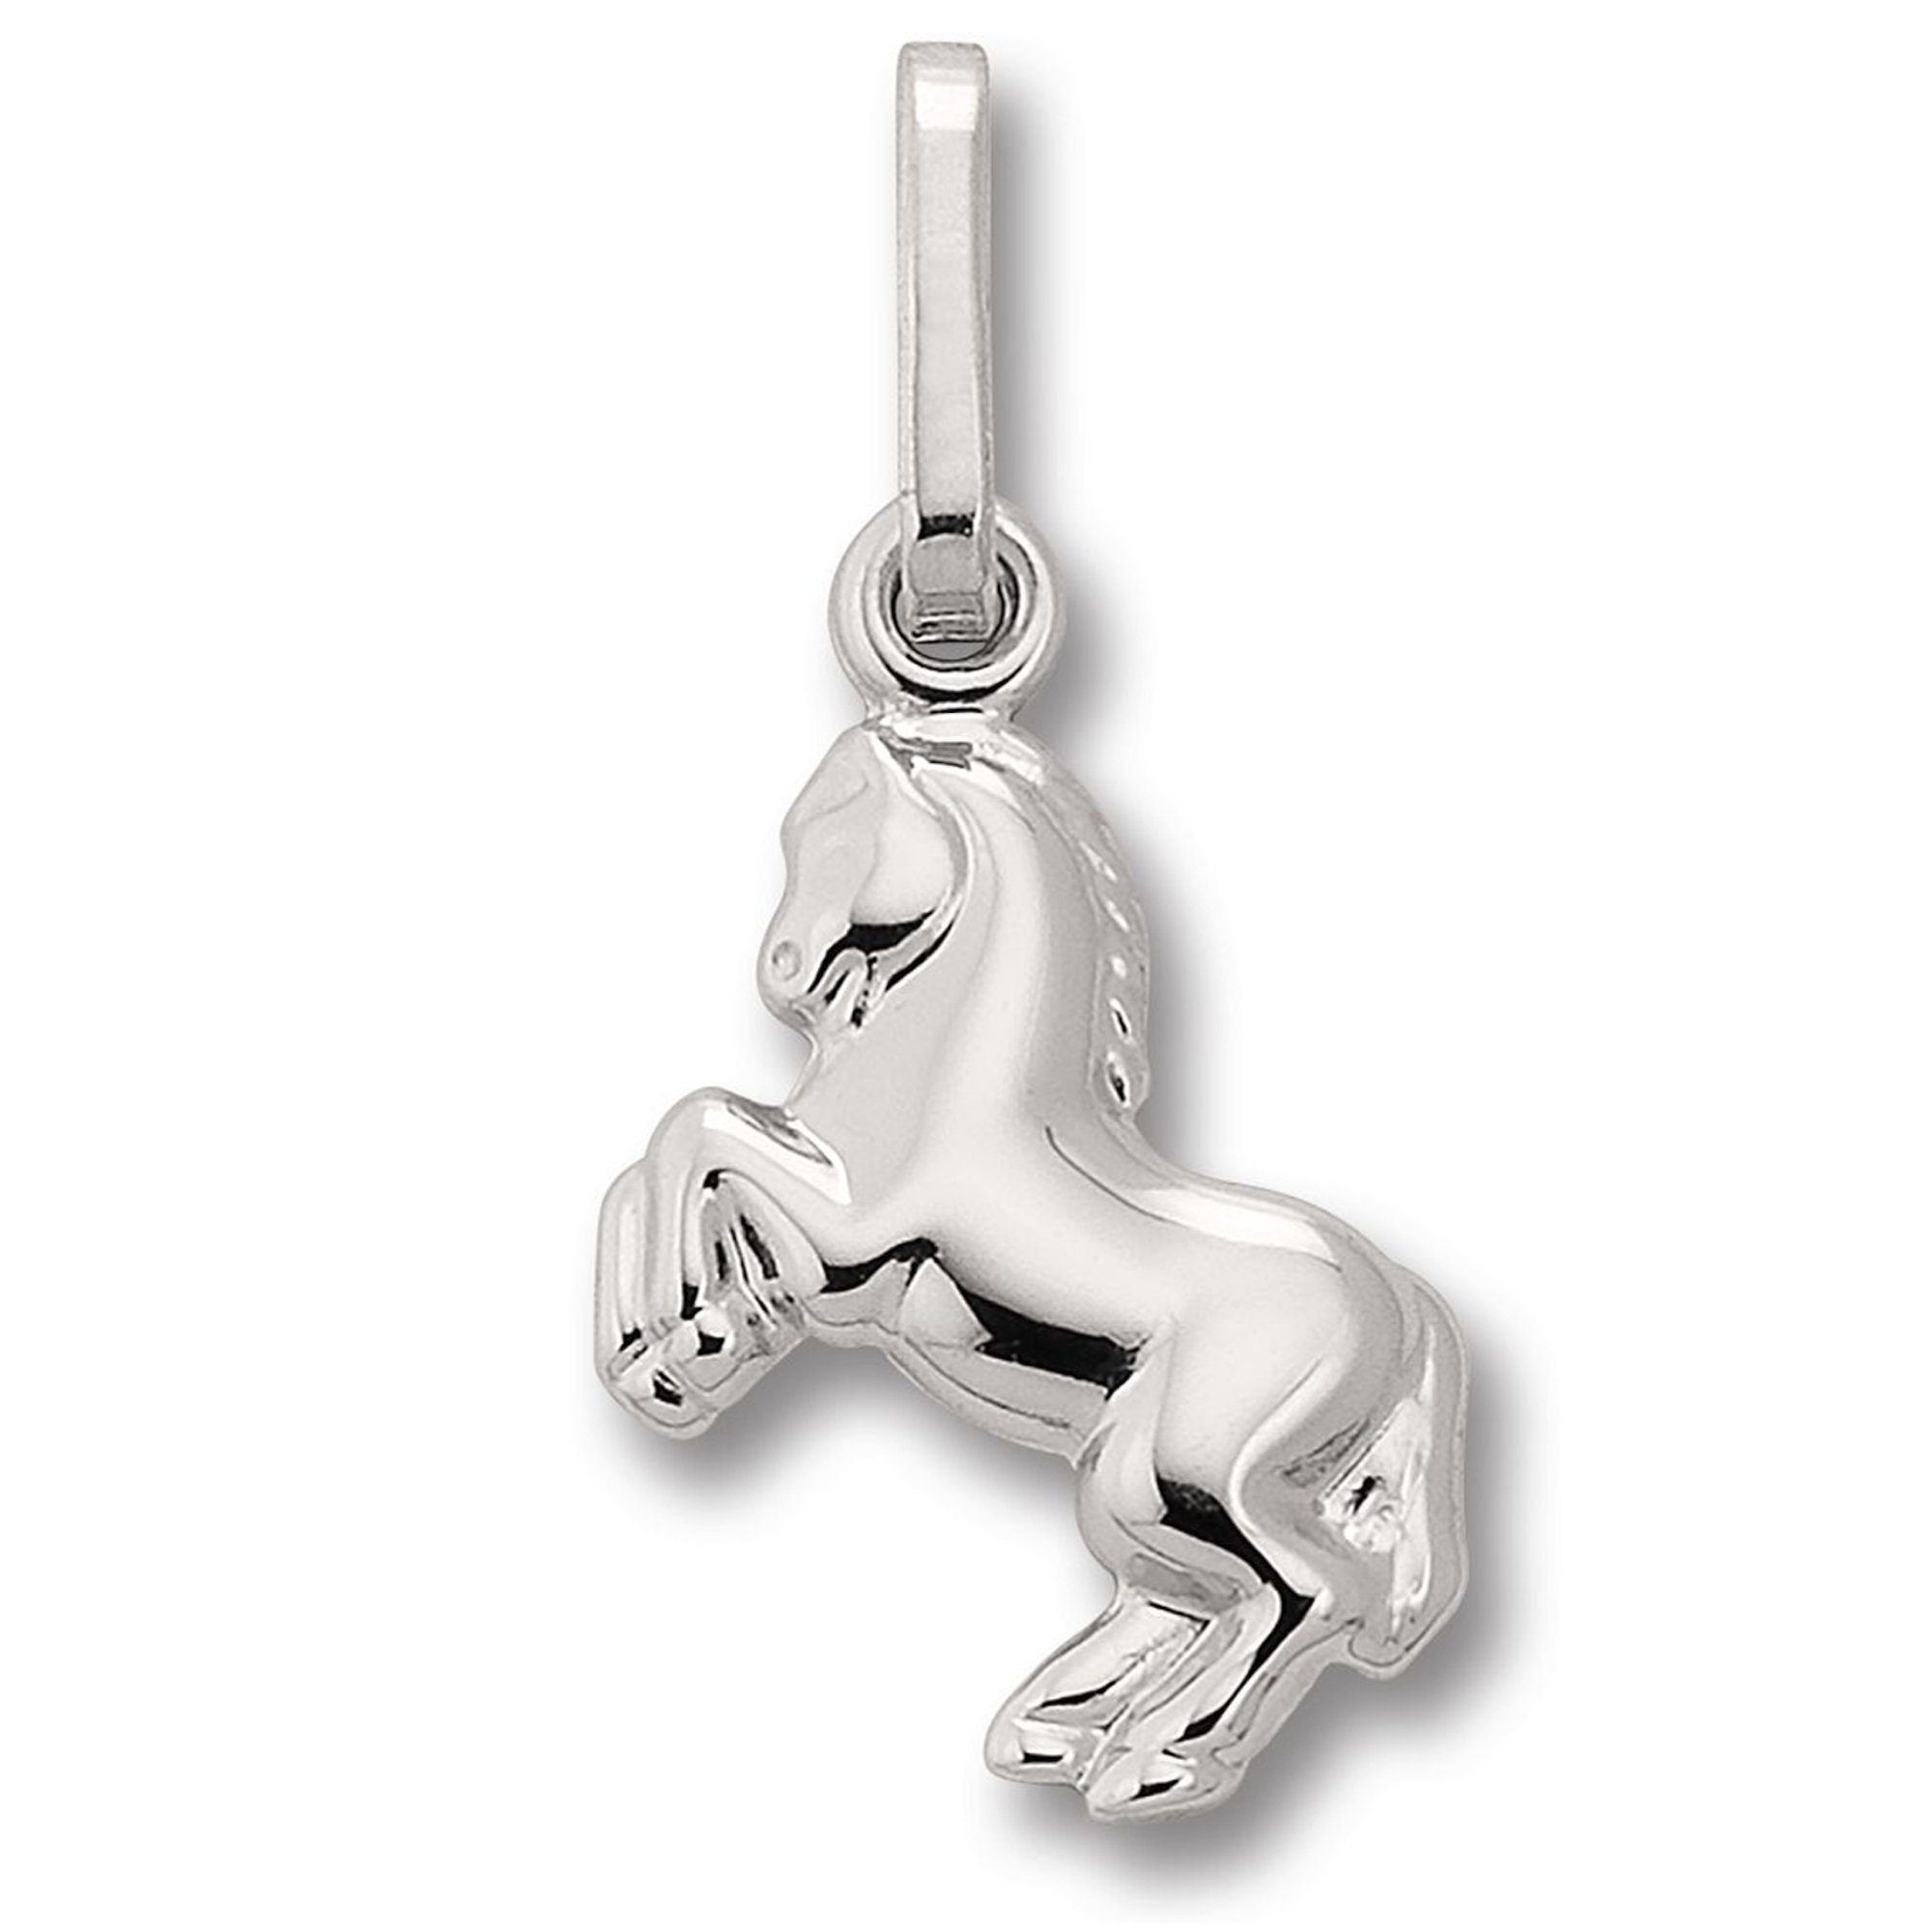 ONE ELEMENT Kettenanhänger Schmuck Damen Pferd aus Pferd 925 Silber Silber, Anhänger